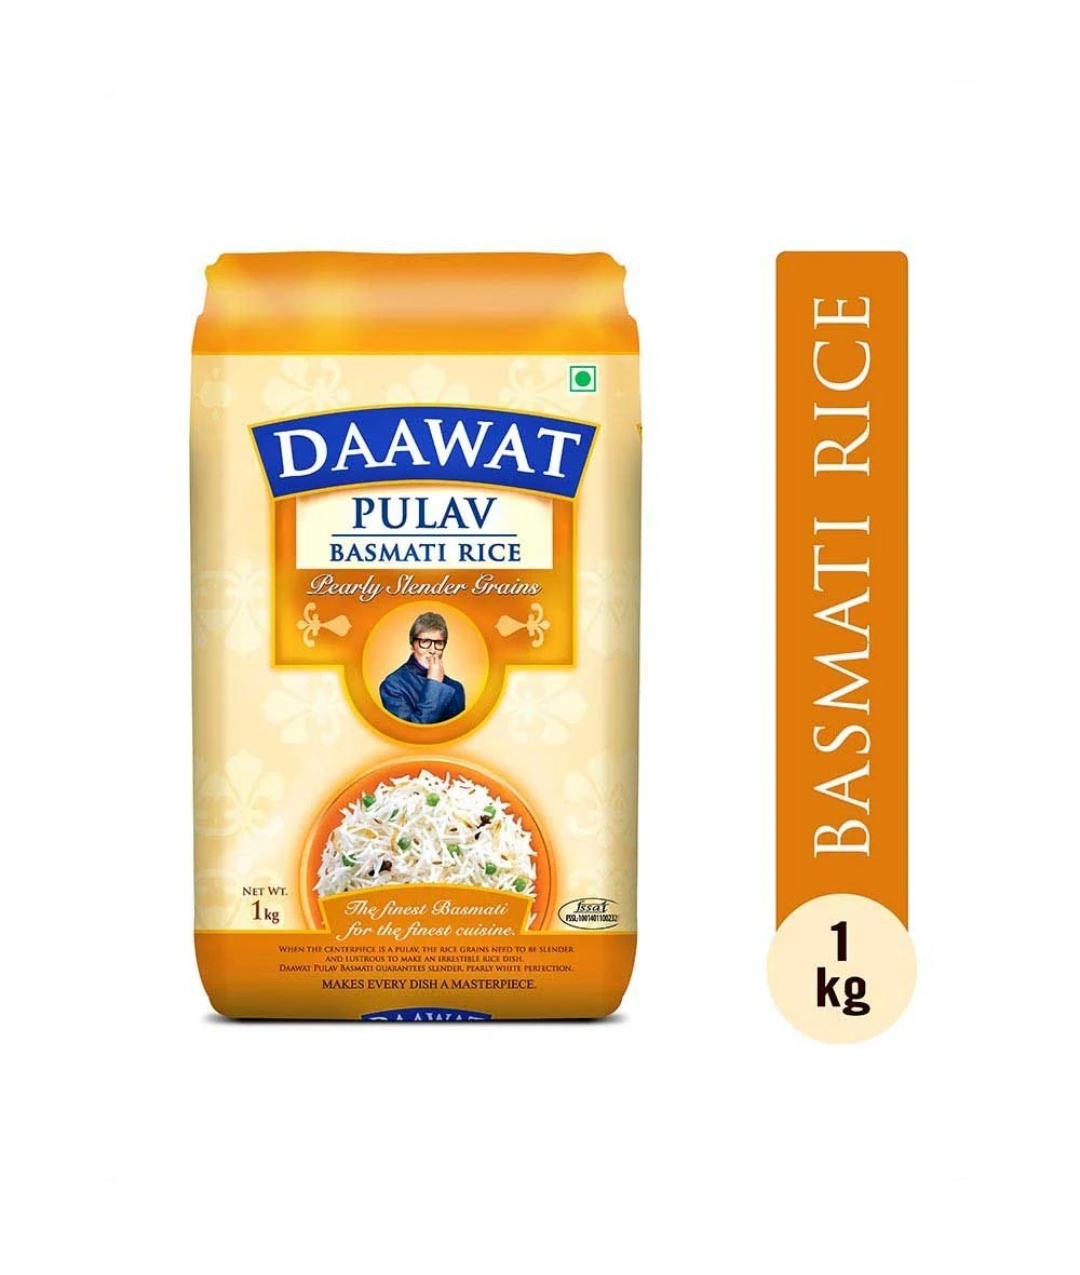 Daawat Pulav Basmati Rice, 1 kg